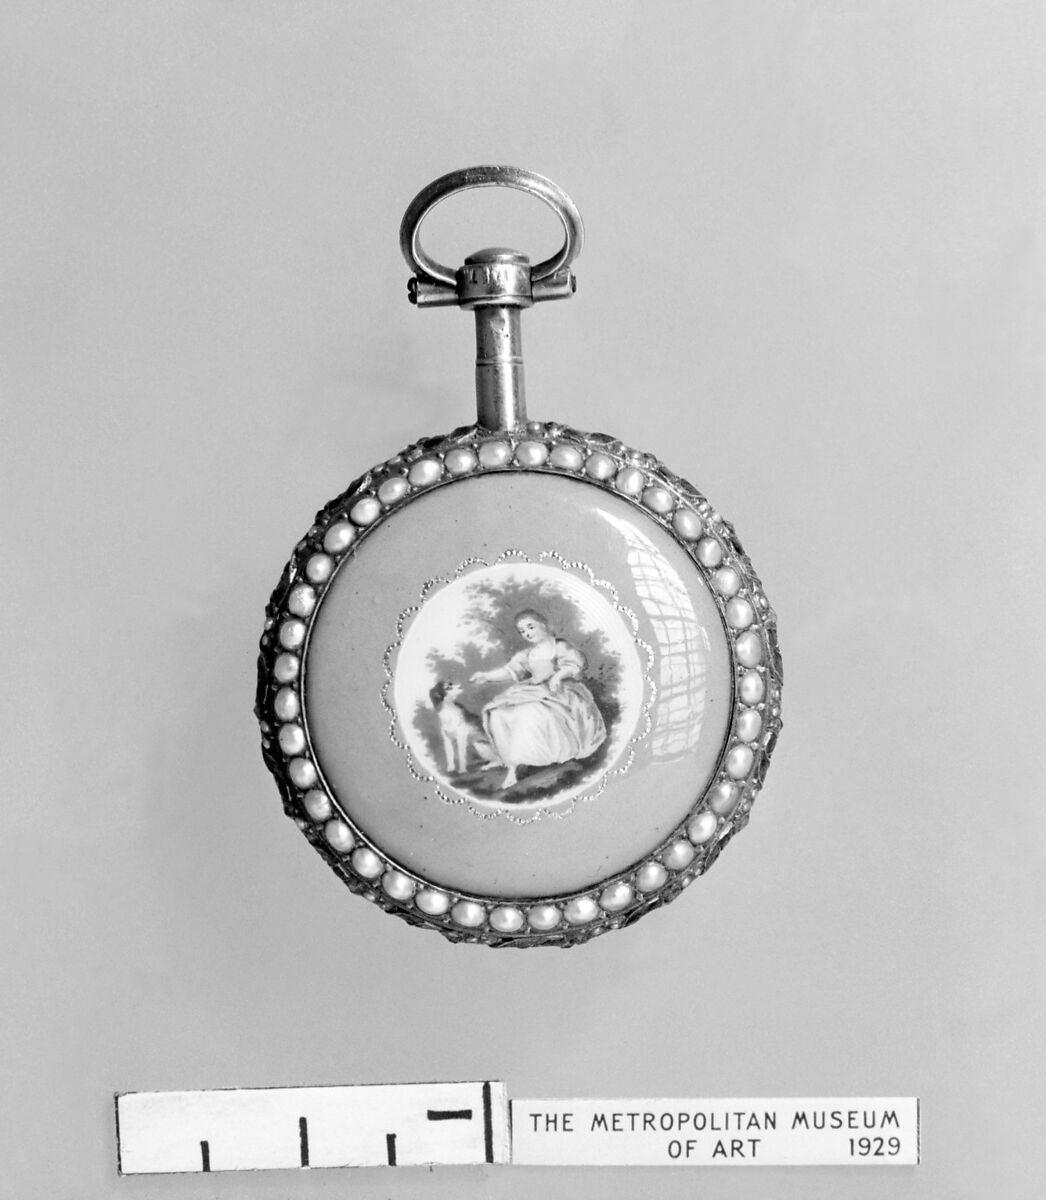 Watch, Watchmaker: Leger (active Paris, ca. 1780), Gold, painted enamel, pearls, garnets, French, Paris 